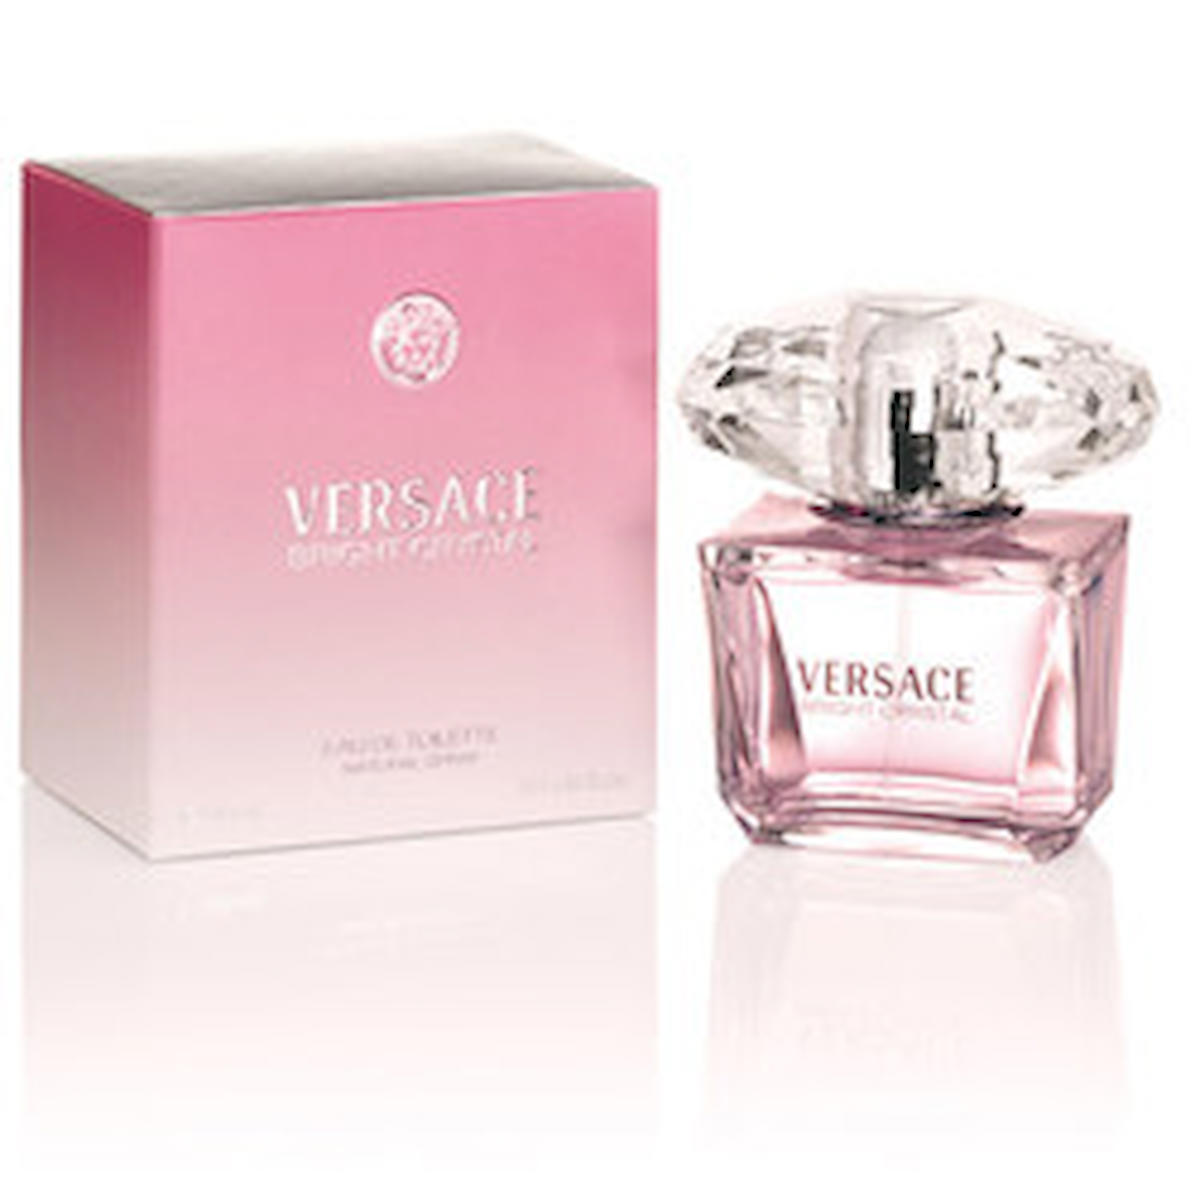 Versace Bright Crsytal EDT Çiçeksi Kadın Parfüm 200 ml